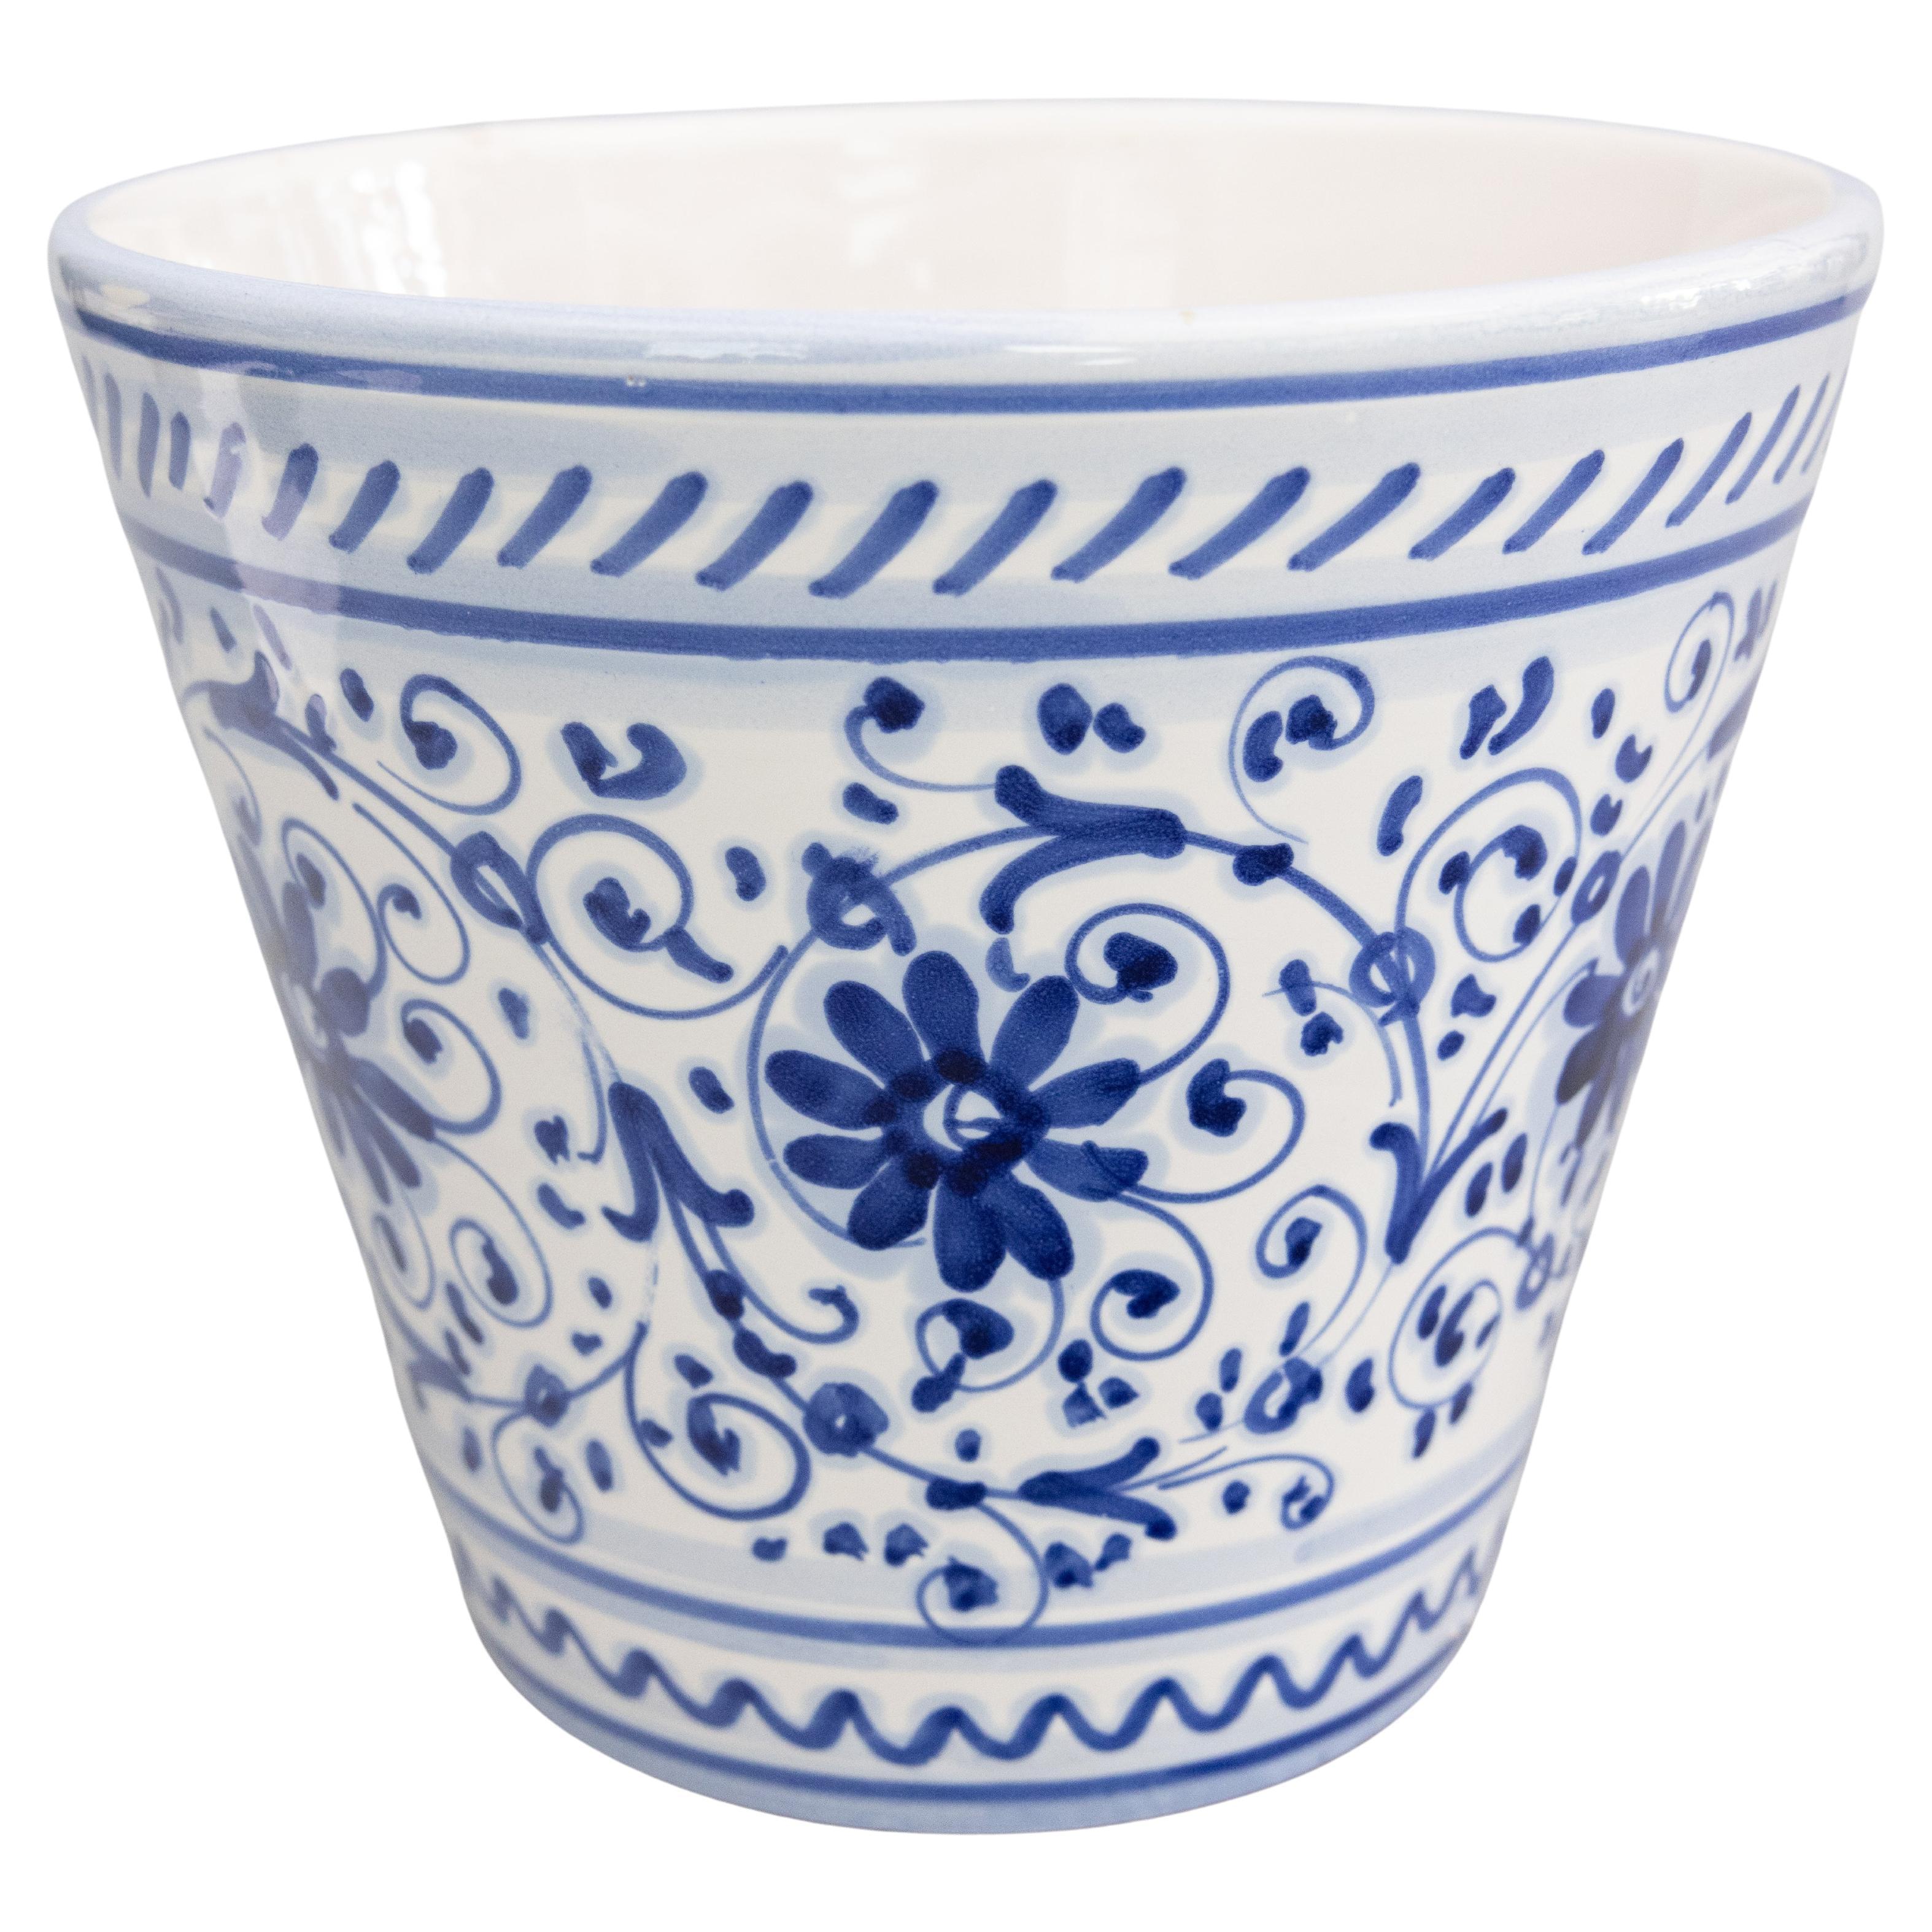 Mid-20th Century Italian Blue & White Floral Ceramic Planter Jardiniere Cachepot For Sale